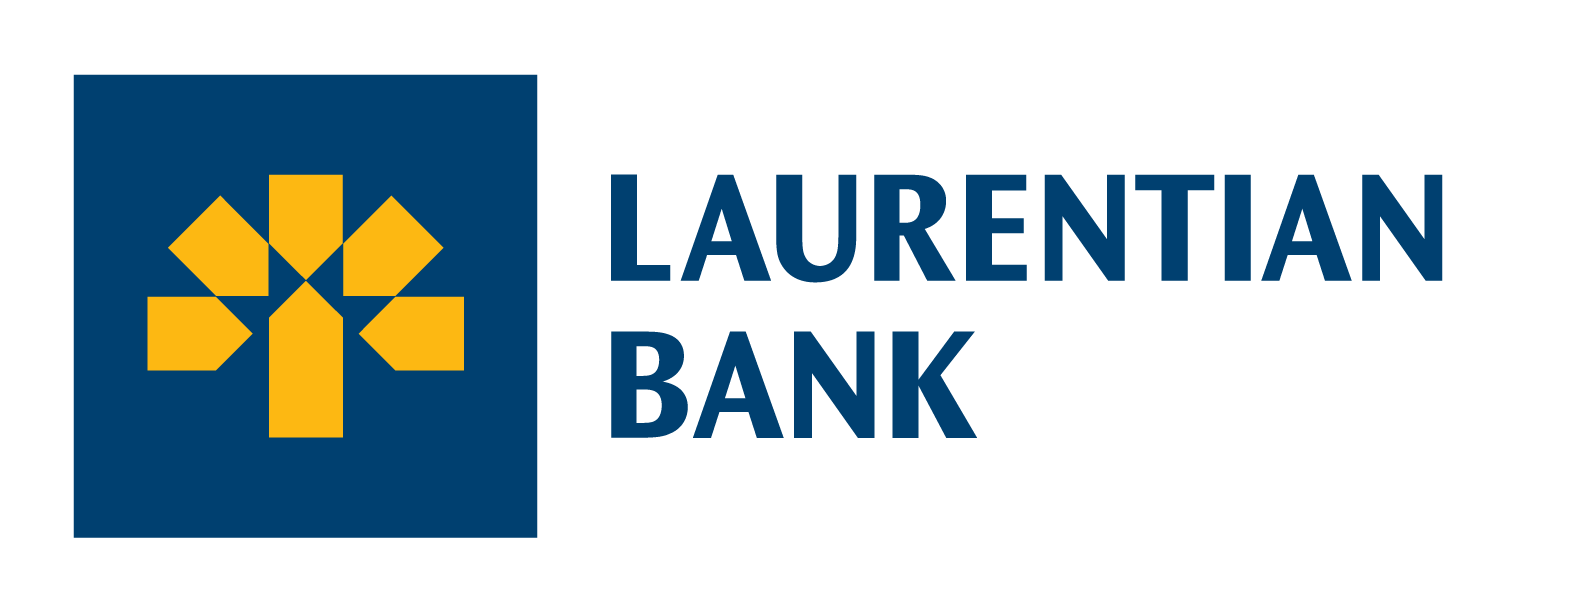 Laurentian_Bank_logo_white.png